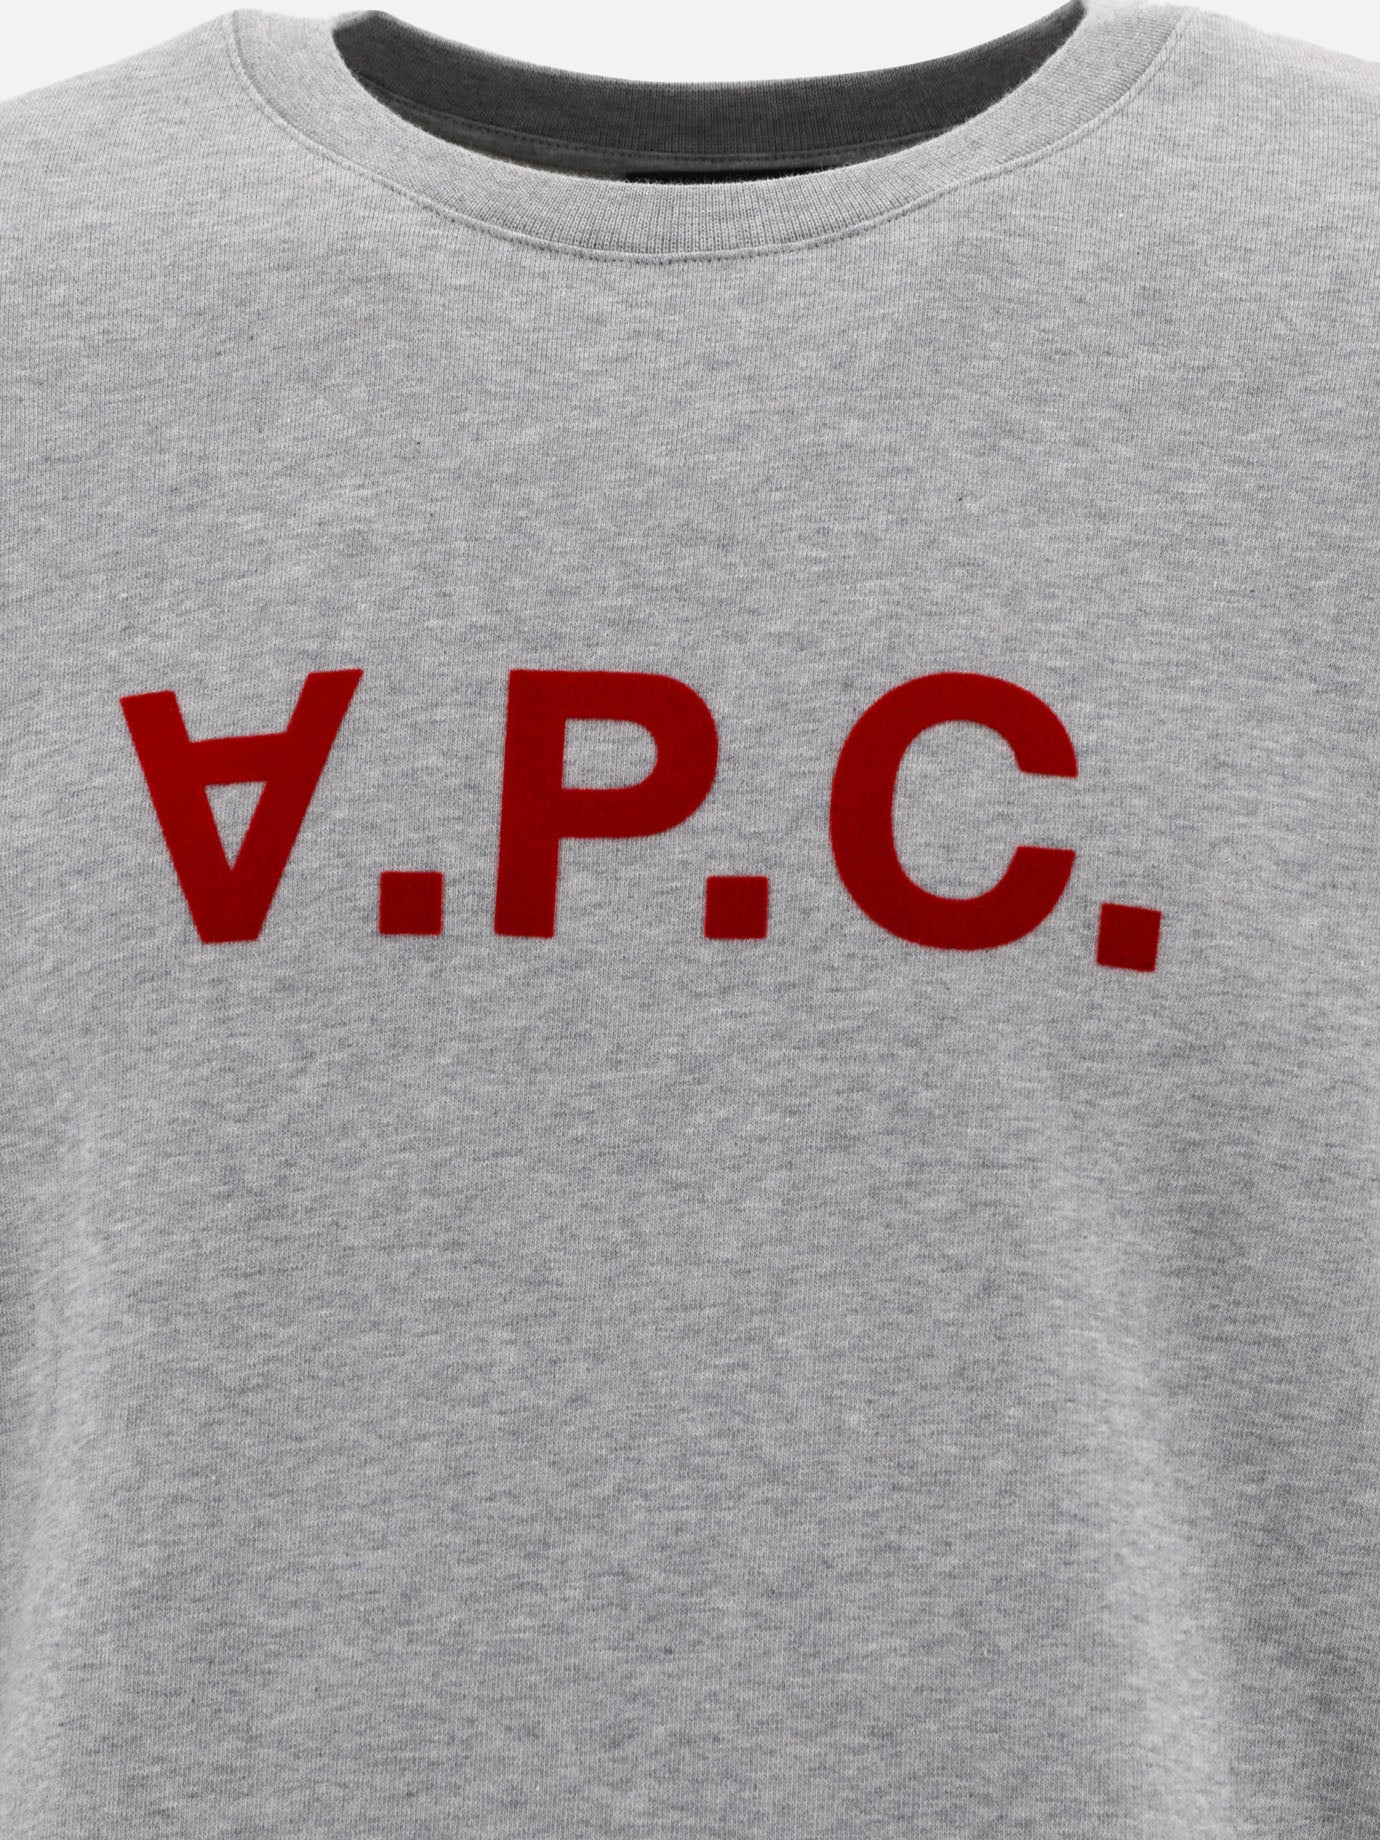 "VPC" sweatshirt